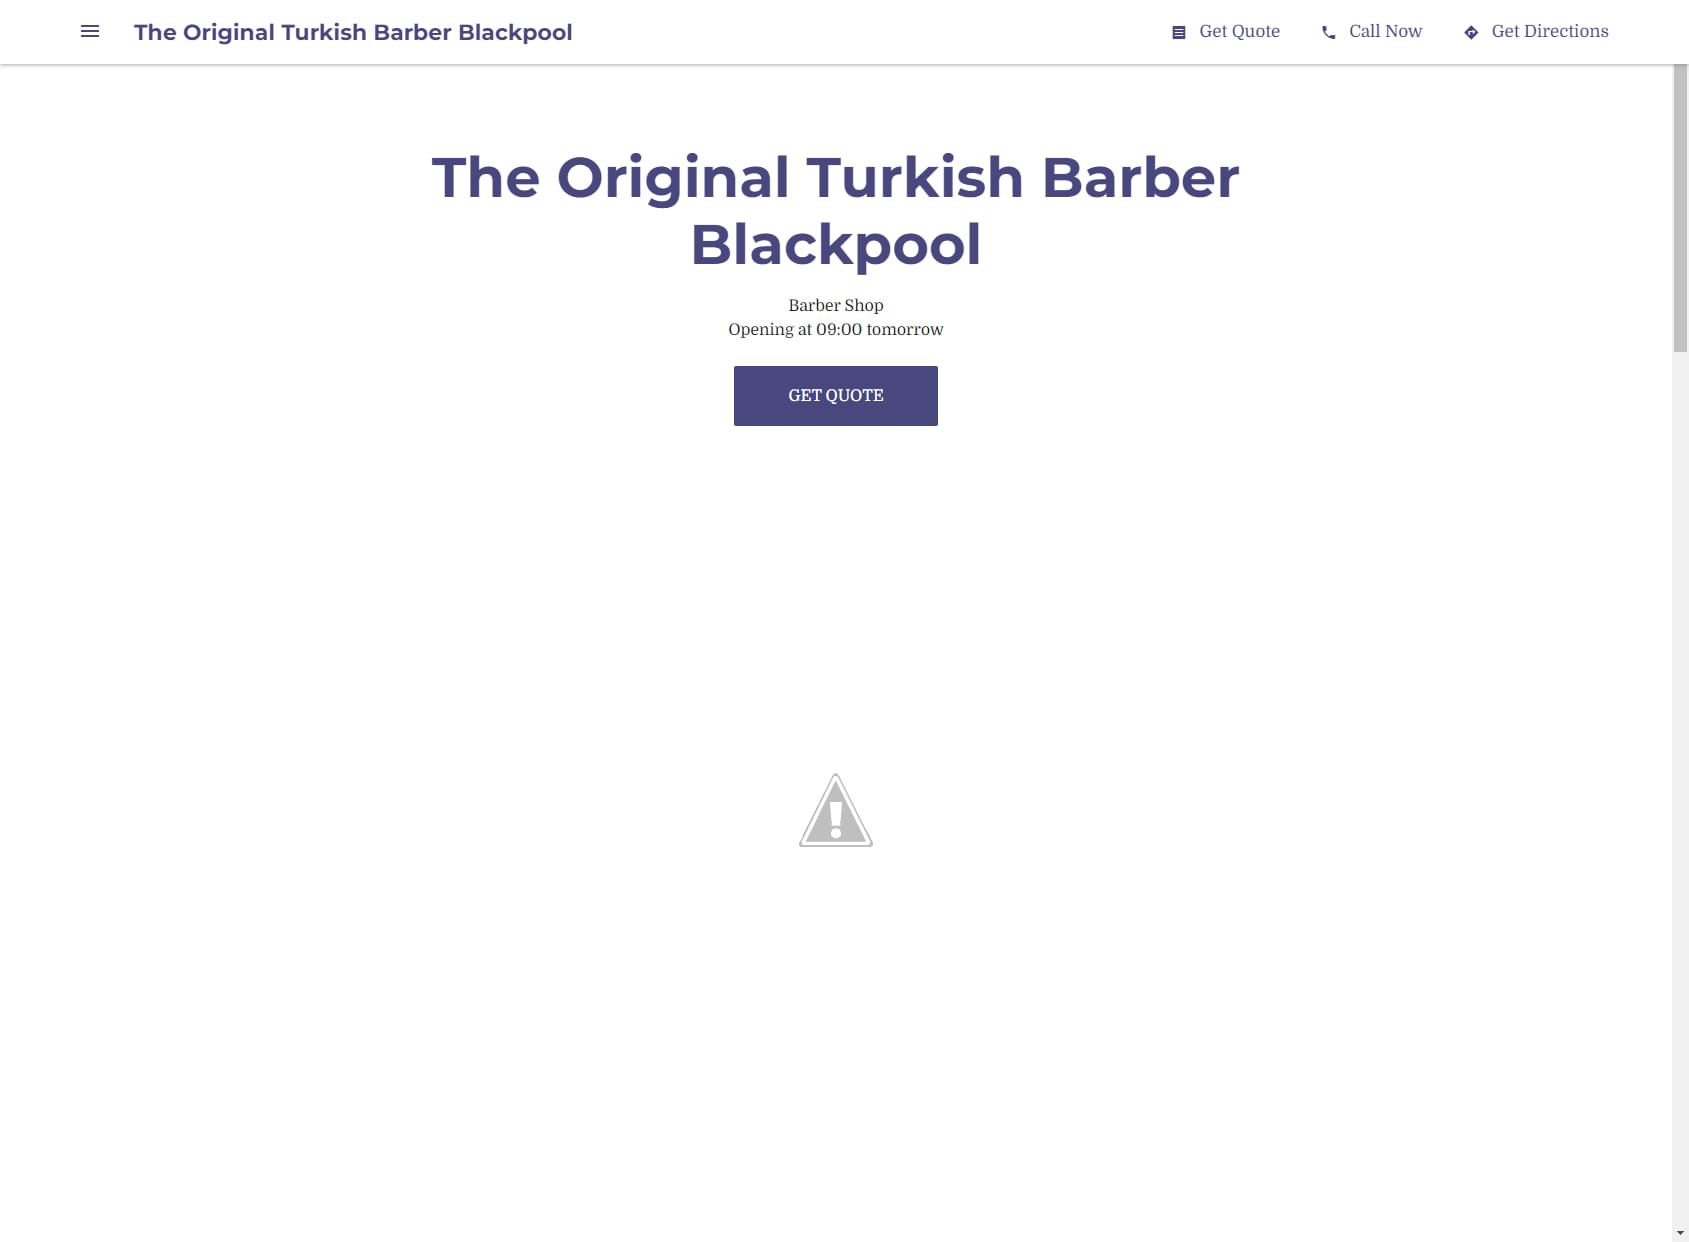 The Original Turkish Barber Blackpool